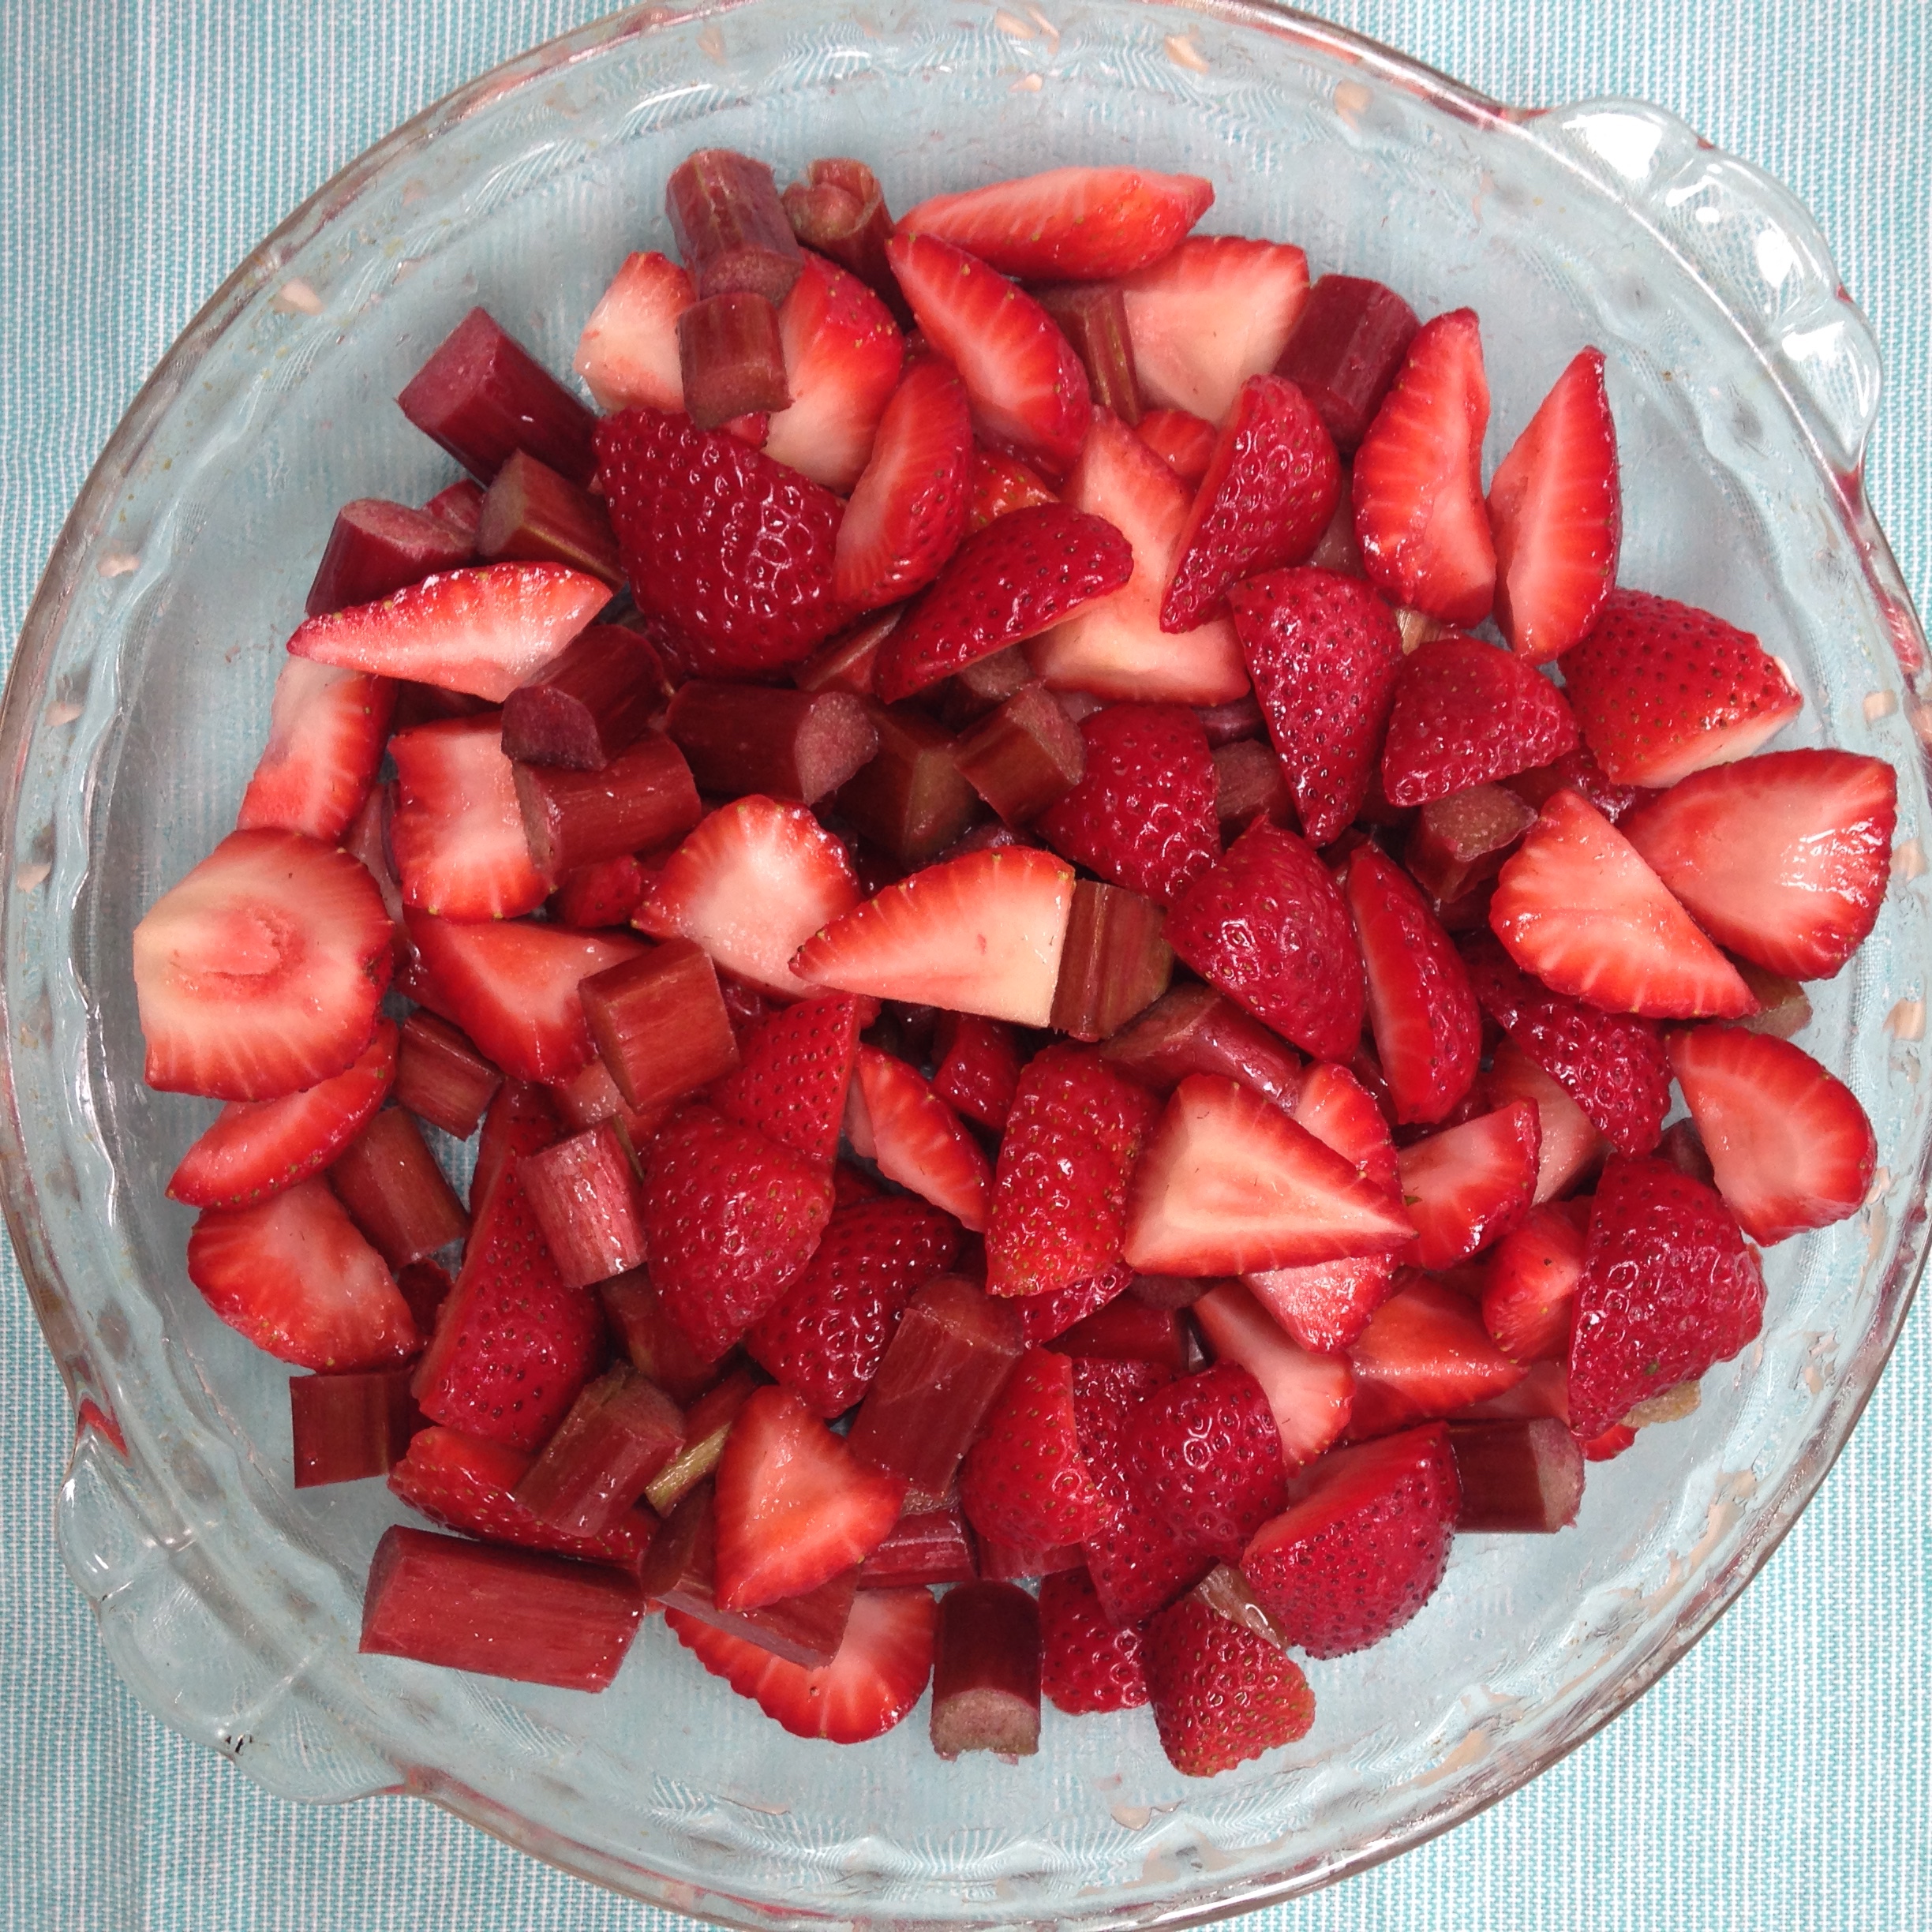 Strawberries-rhubarb-cobbler-chopped